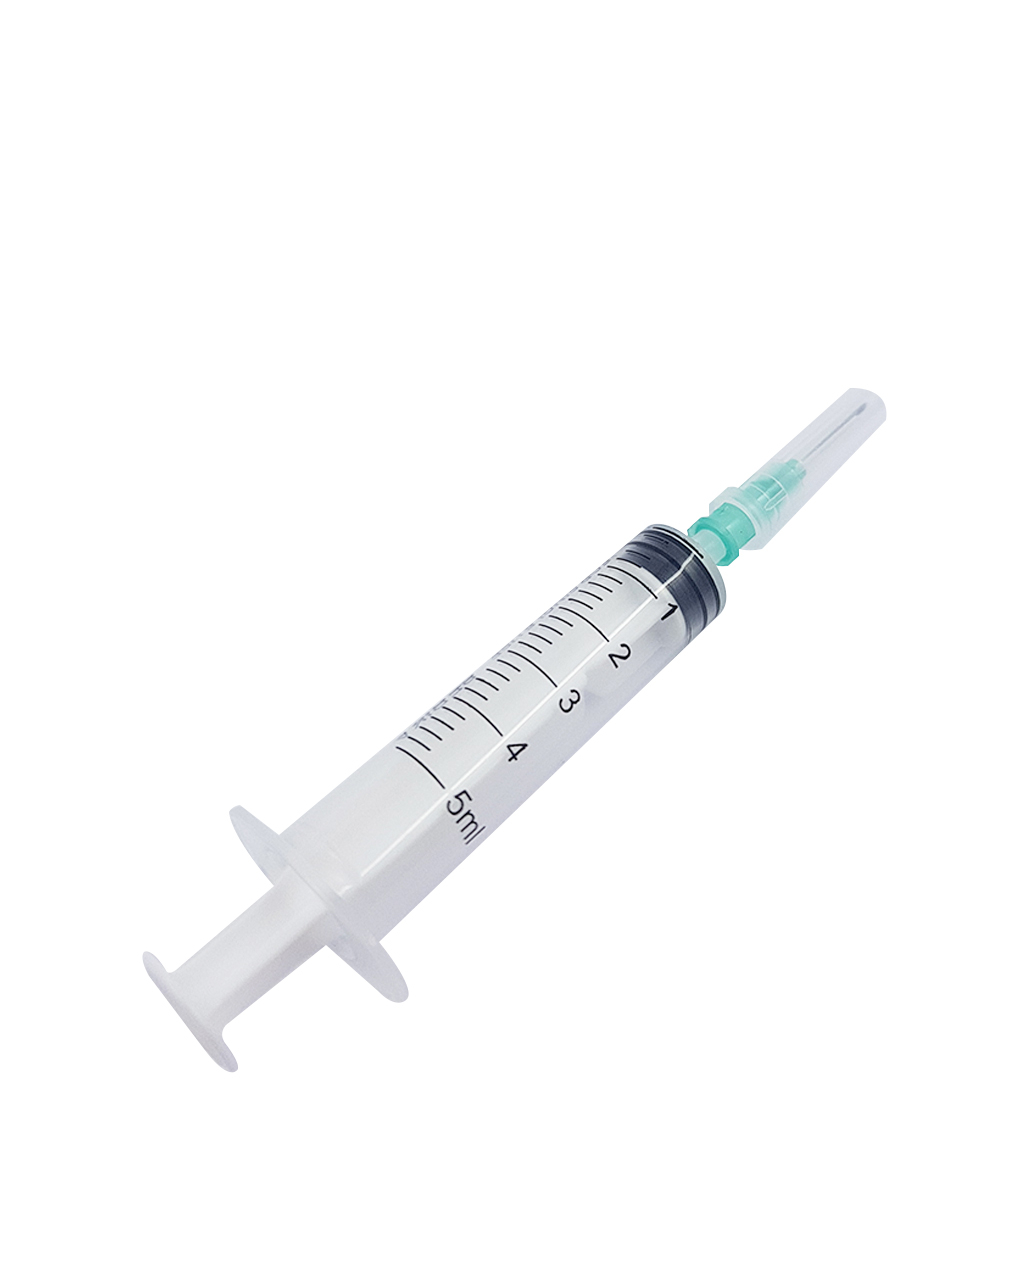 10 x 5 ml syringe sterile BD